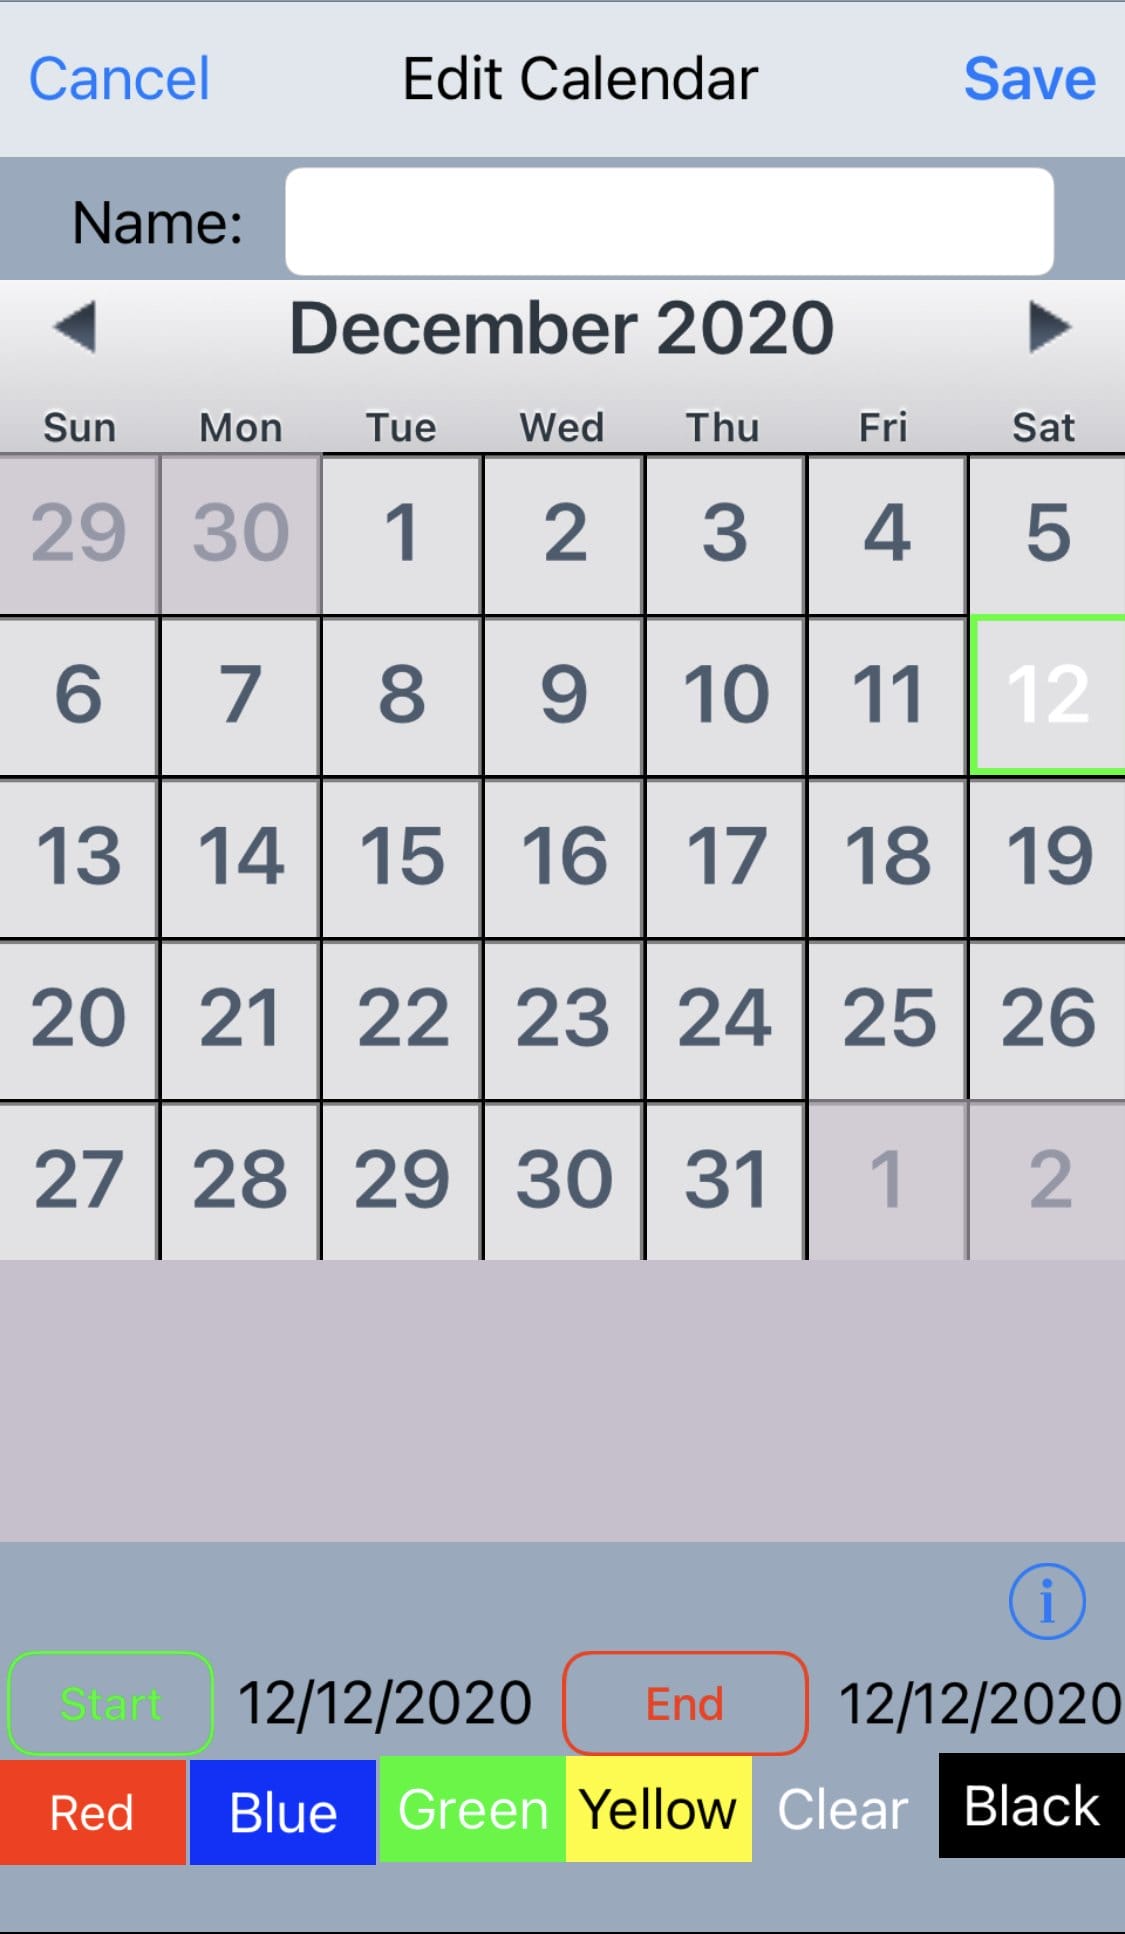 eCal Emergency Calendar - Edit Calendar